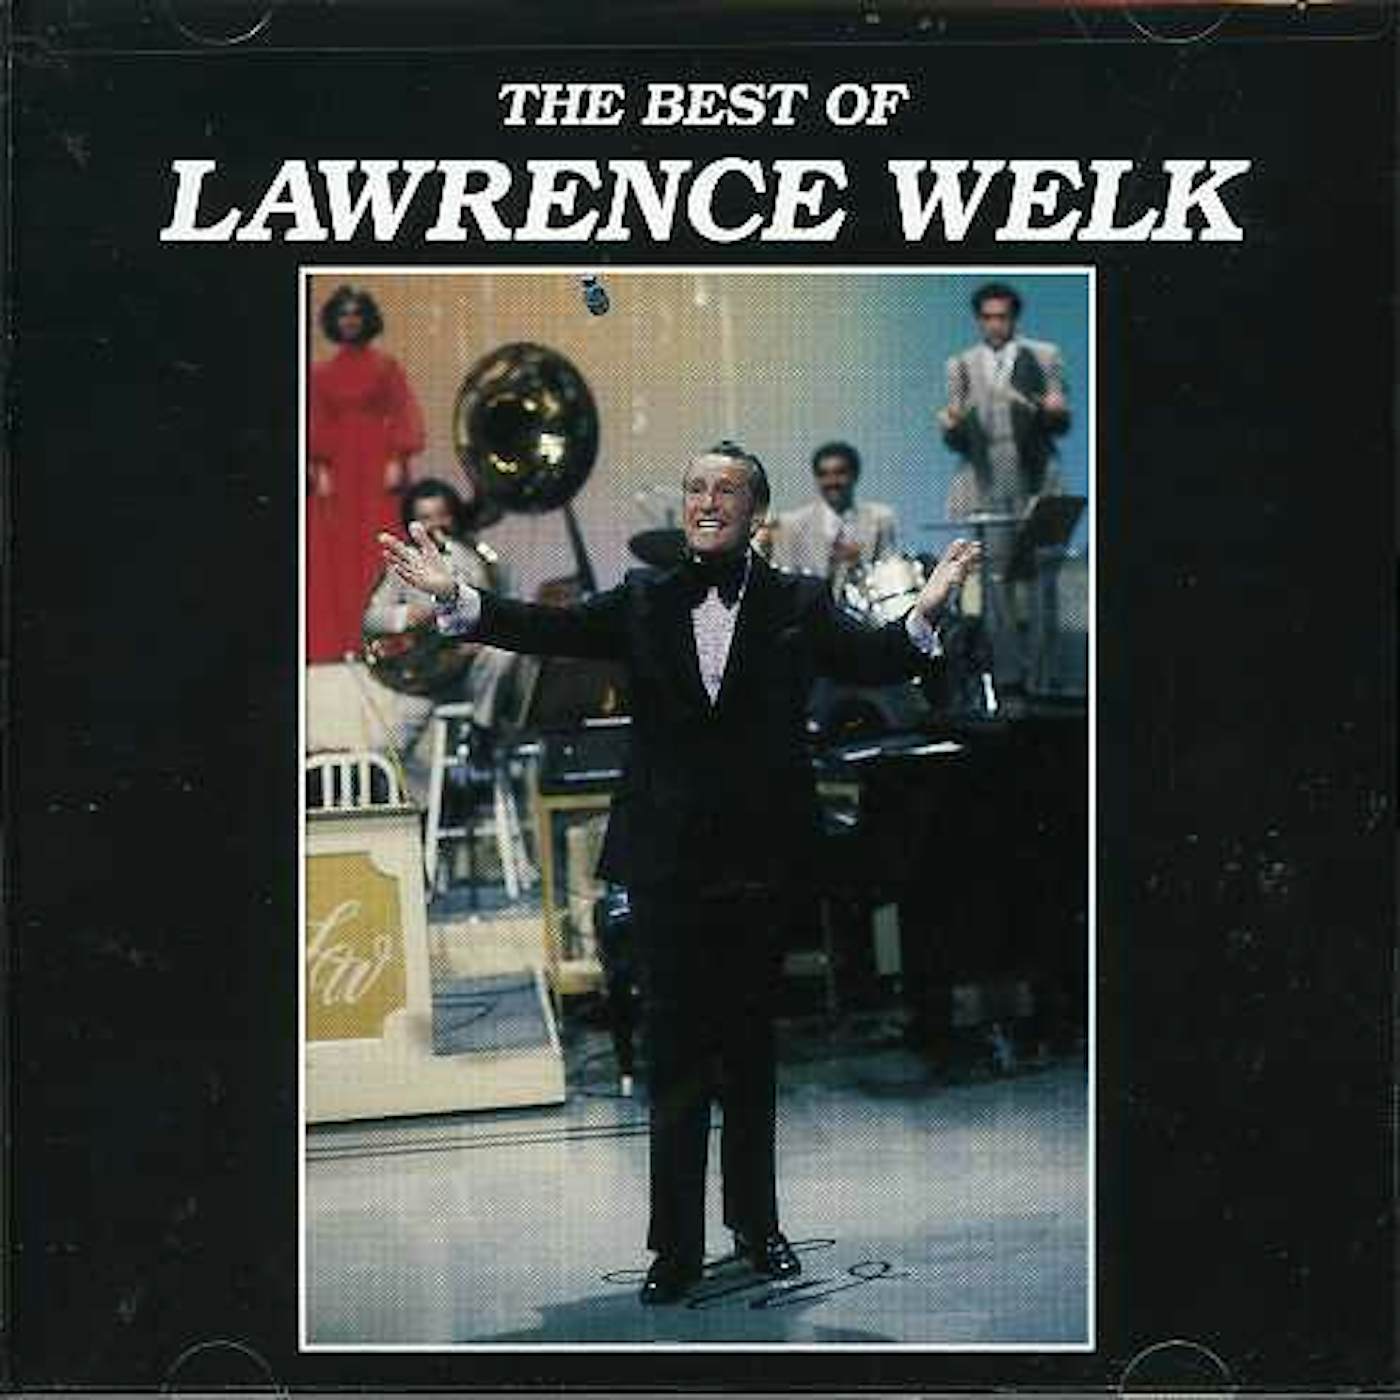 Lawrence Welk BEST OF CD